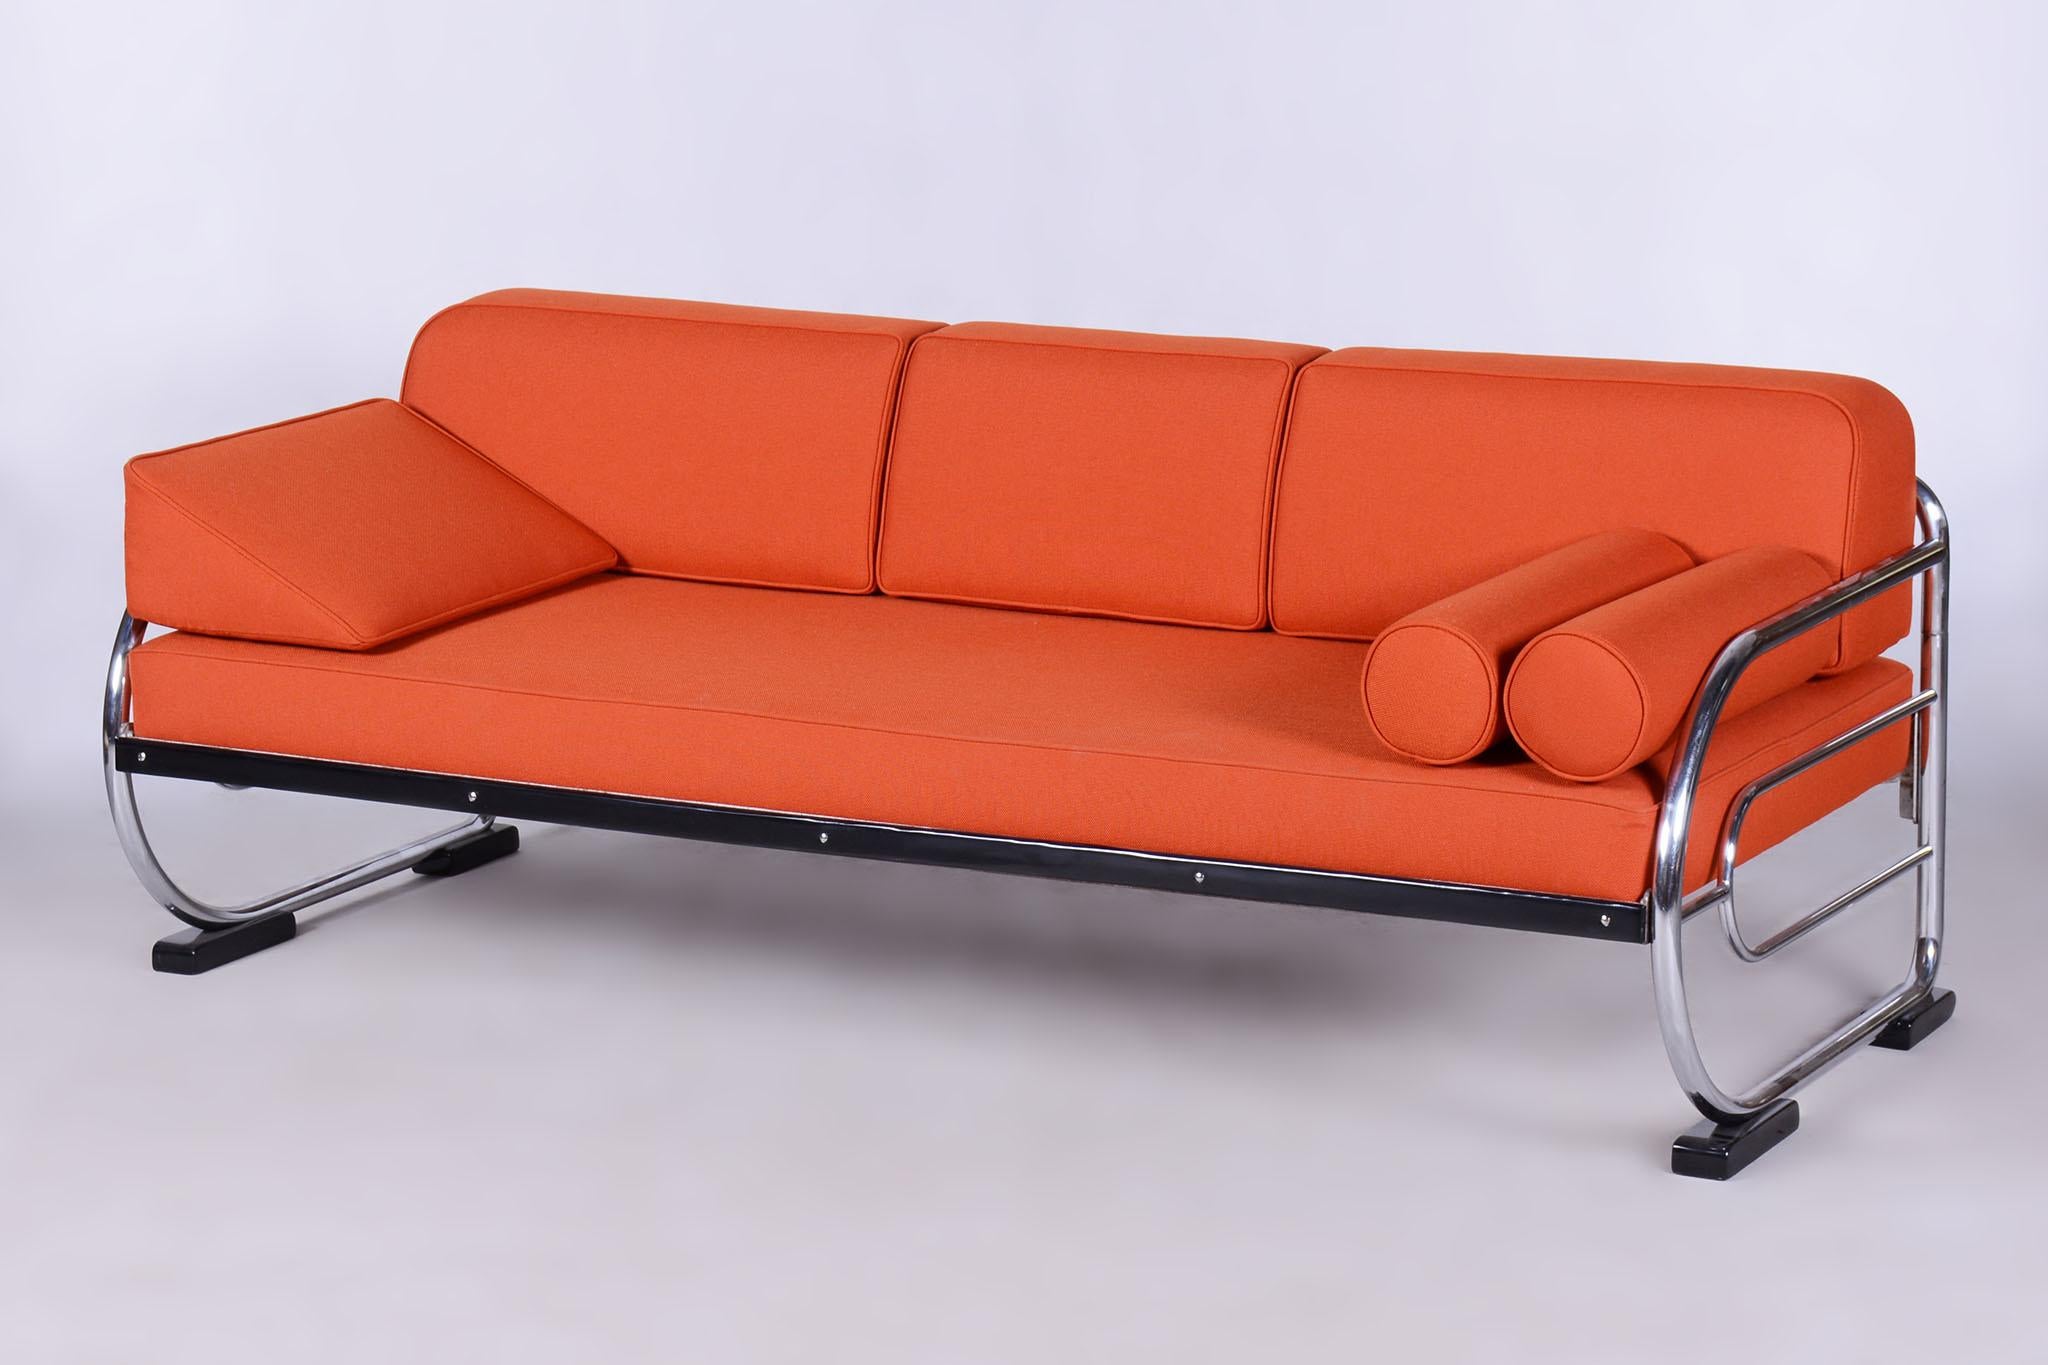 Steel Restored Orange Bauhaus Sofa, Robert Slezak, High-Quality Leather, 1930s For Sale